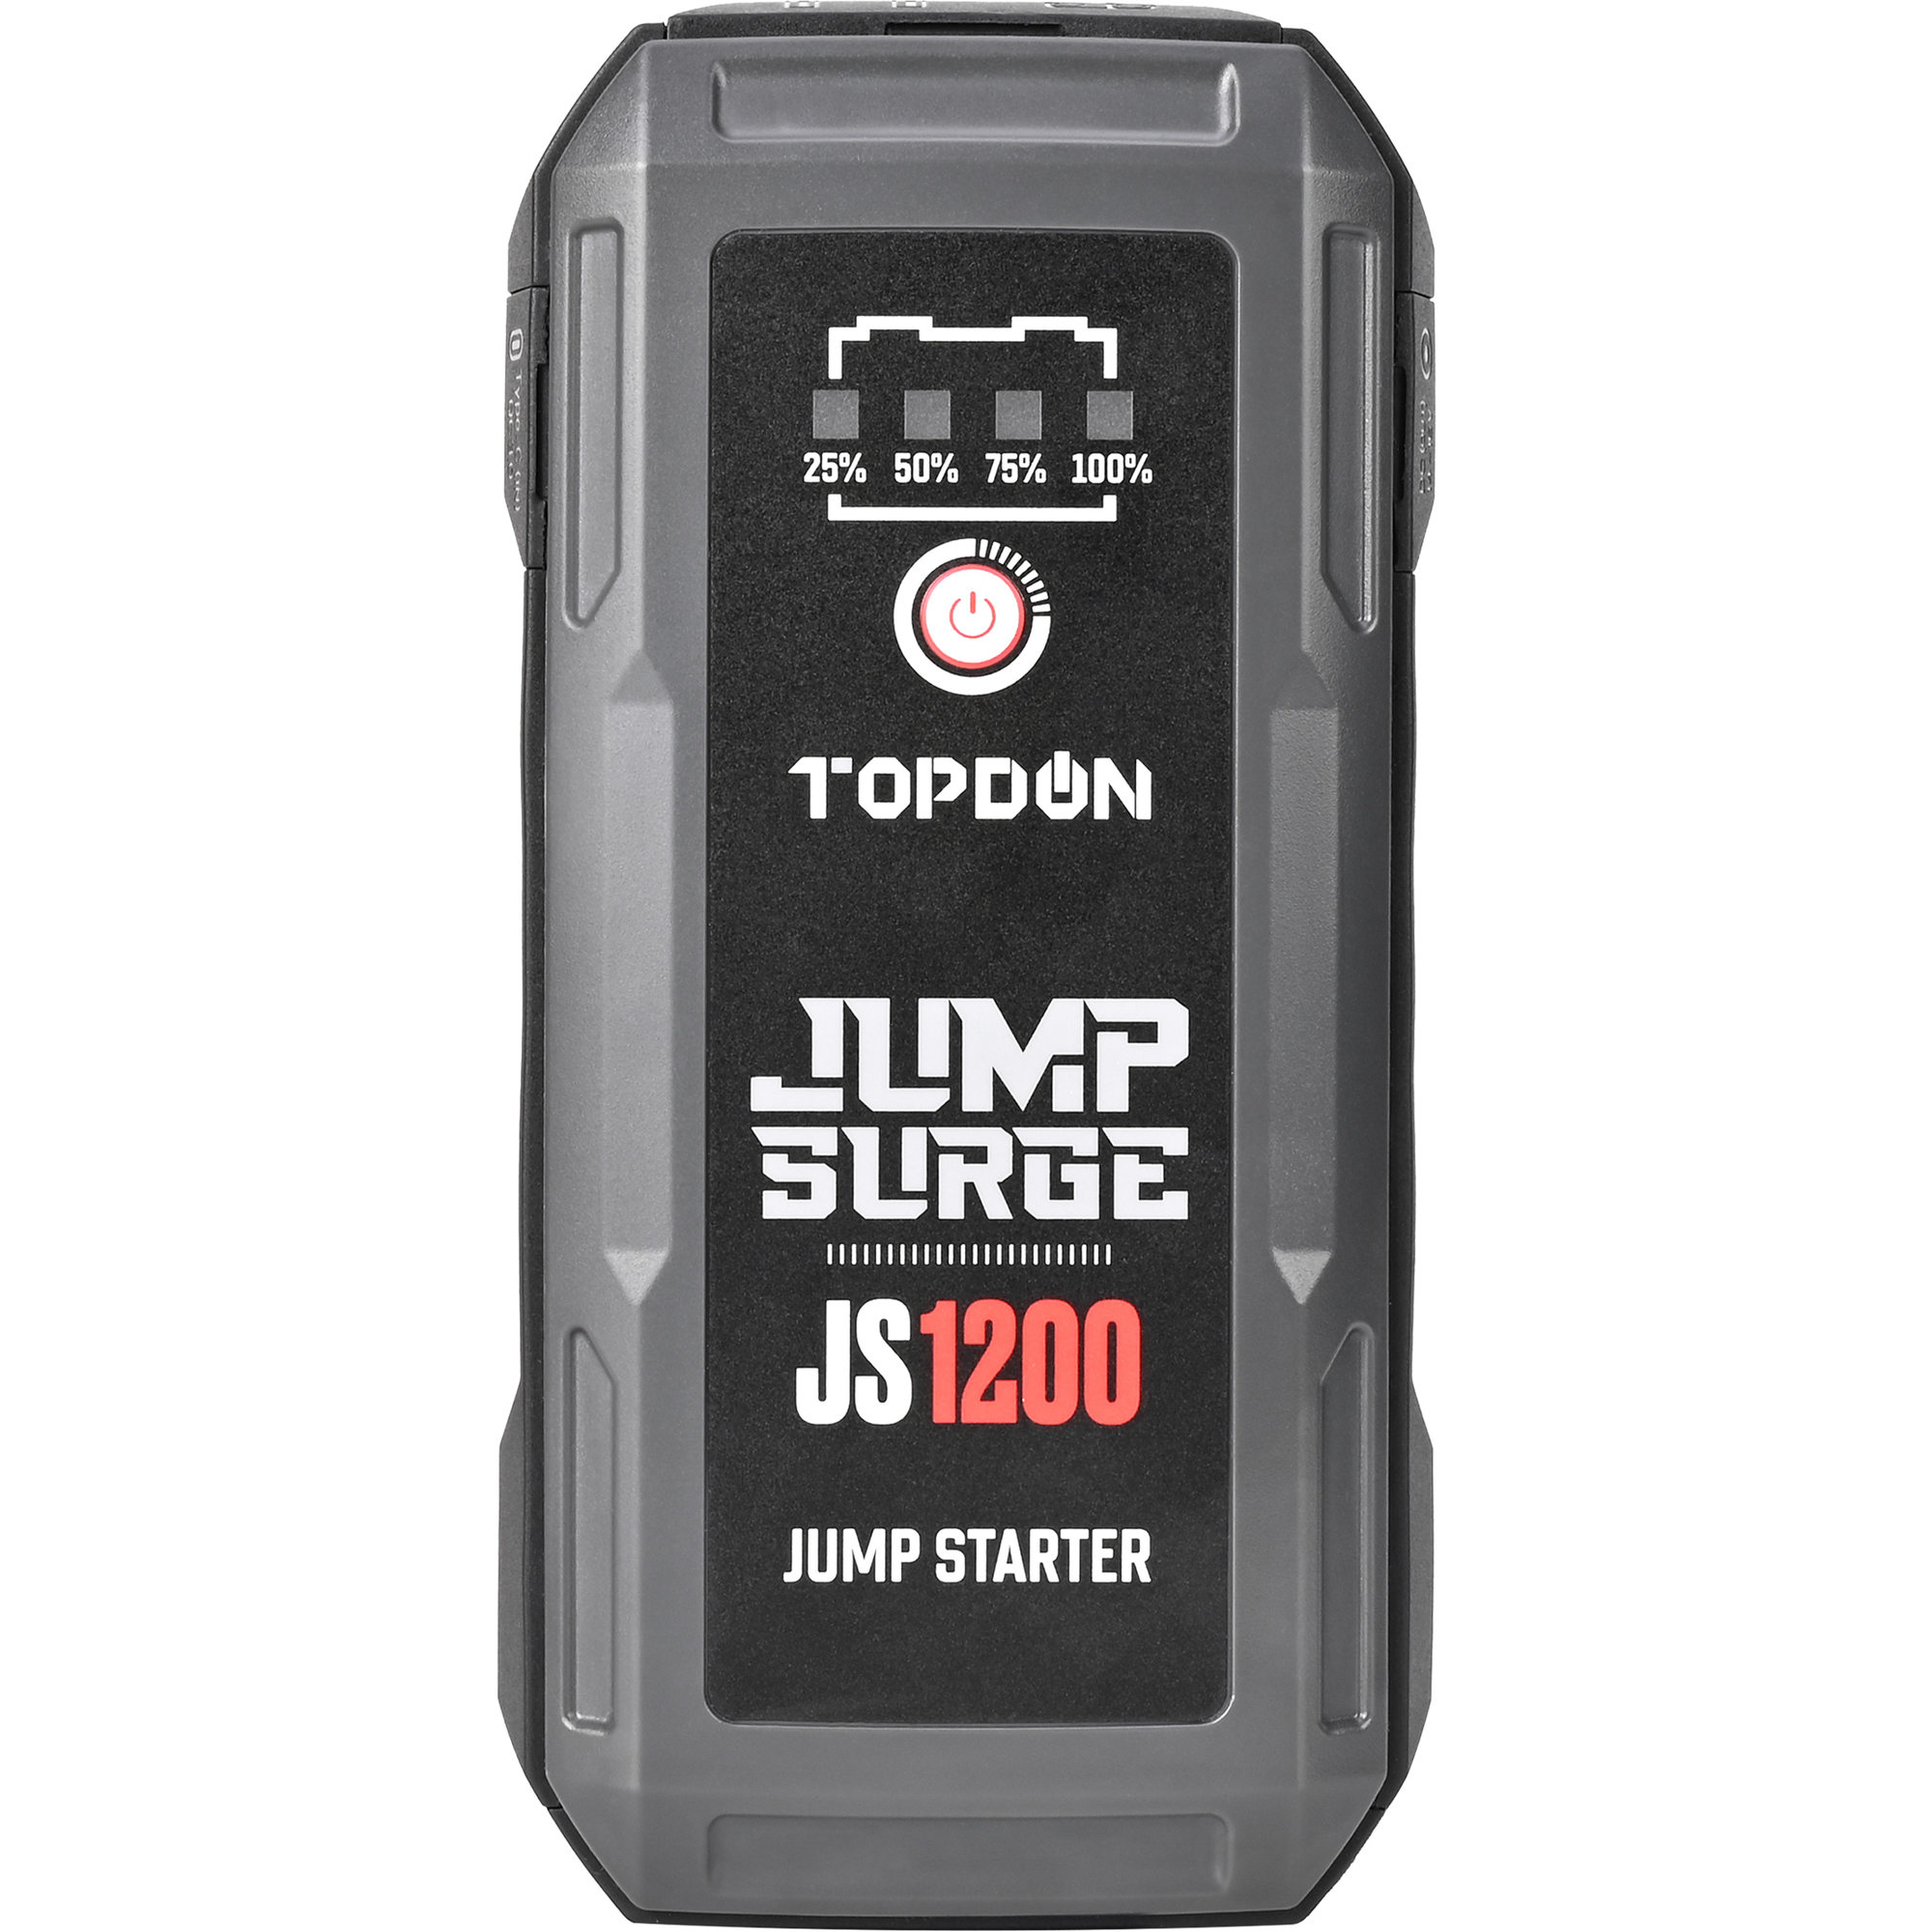 TOPDON, JumpSurge1200, Cranking Amp Power Bank and jump-starter for 12V batteries, Model JS1200